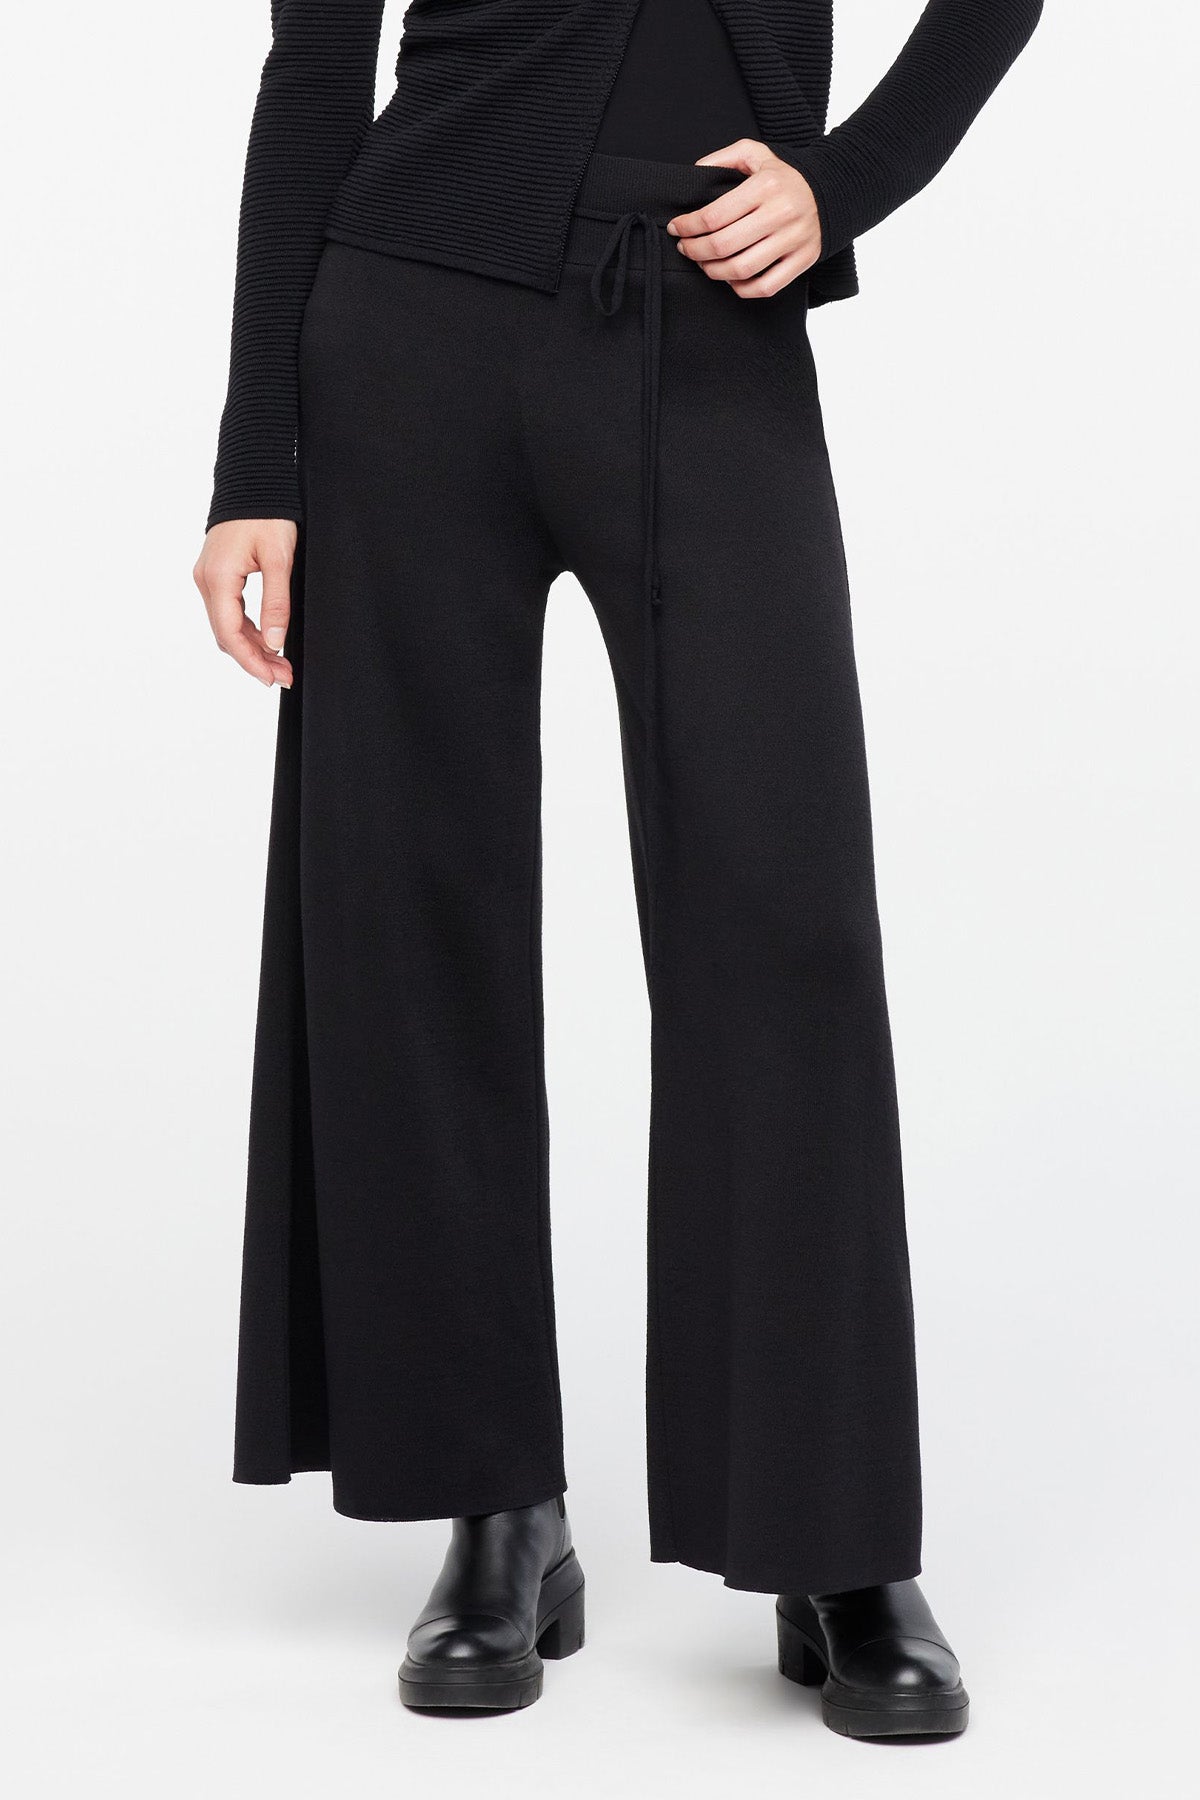 Sarah Pacini Yün Pantolon-Libas Trendy Fashion Store